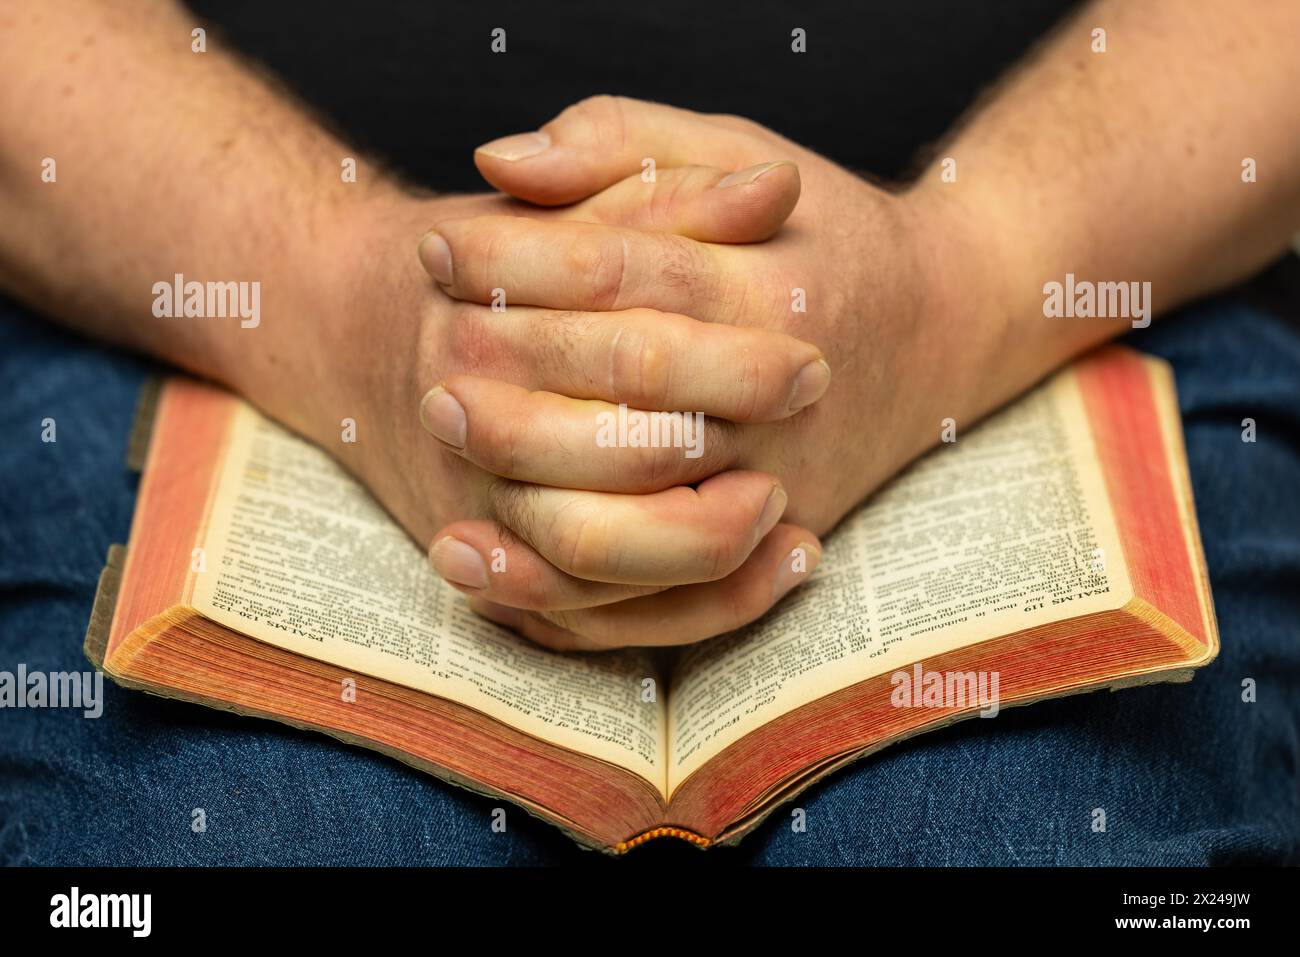 A man's praying hands on an open Bible. Stock Photo